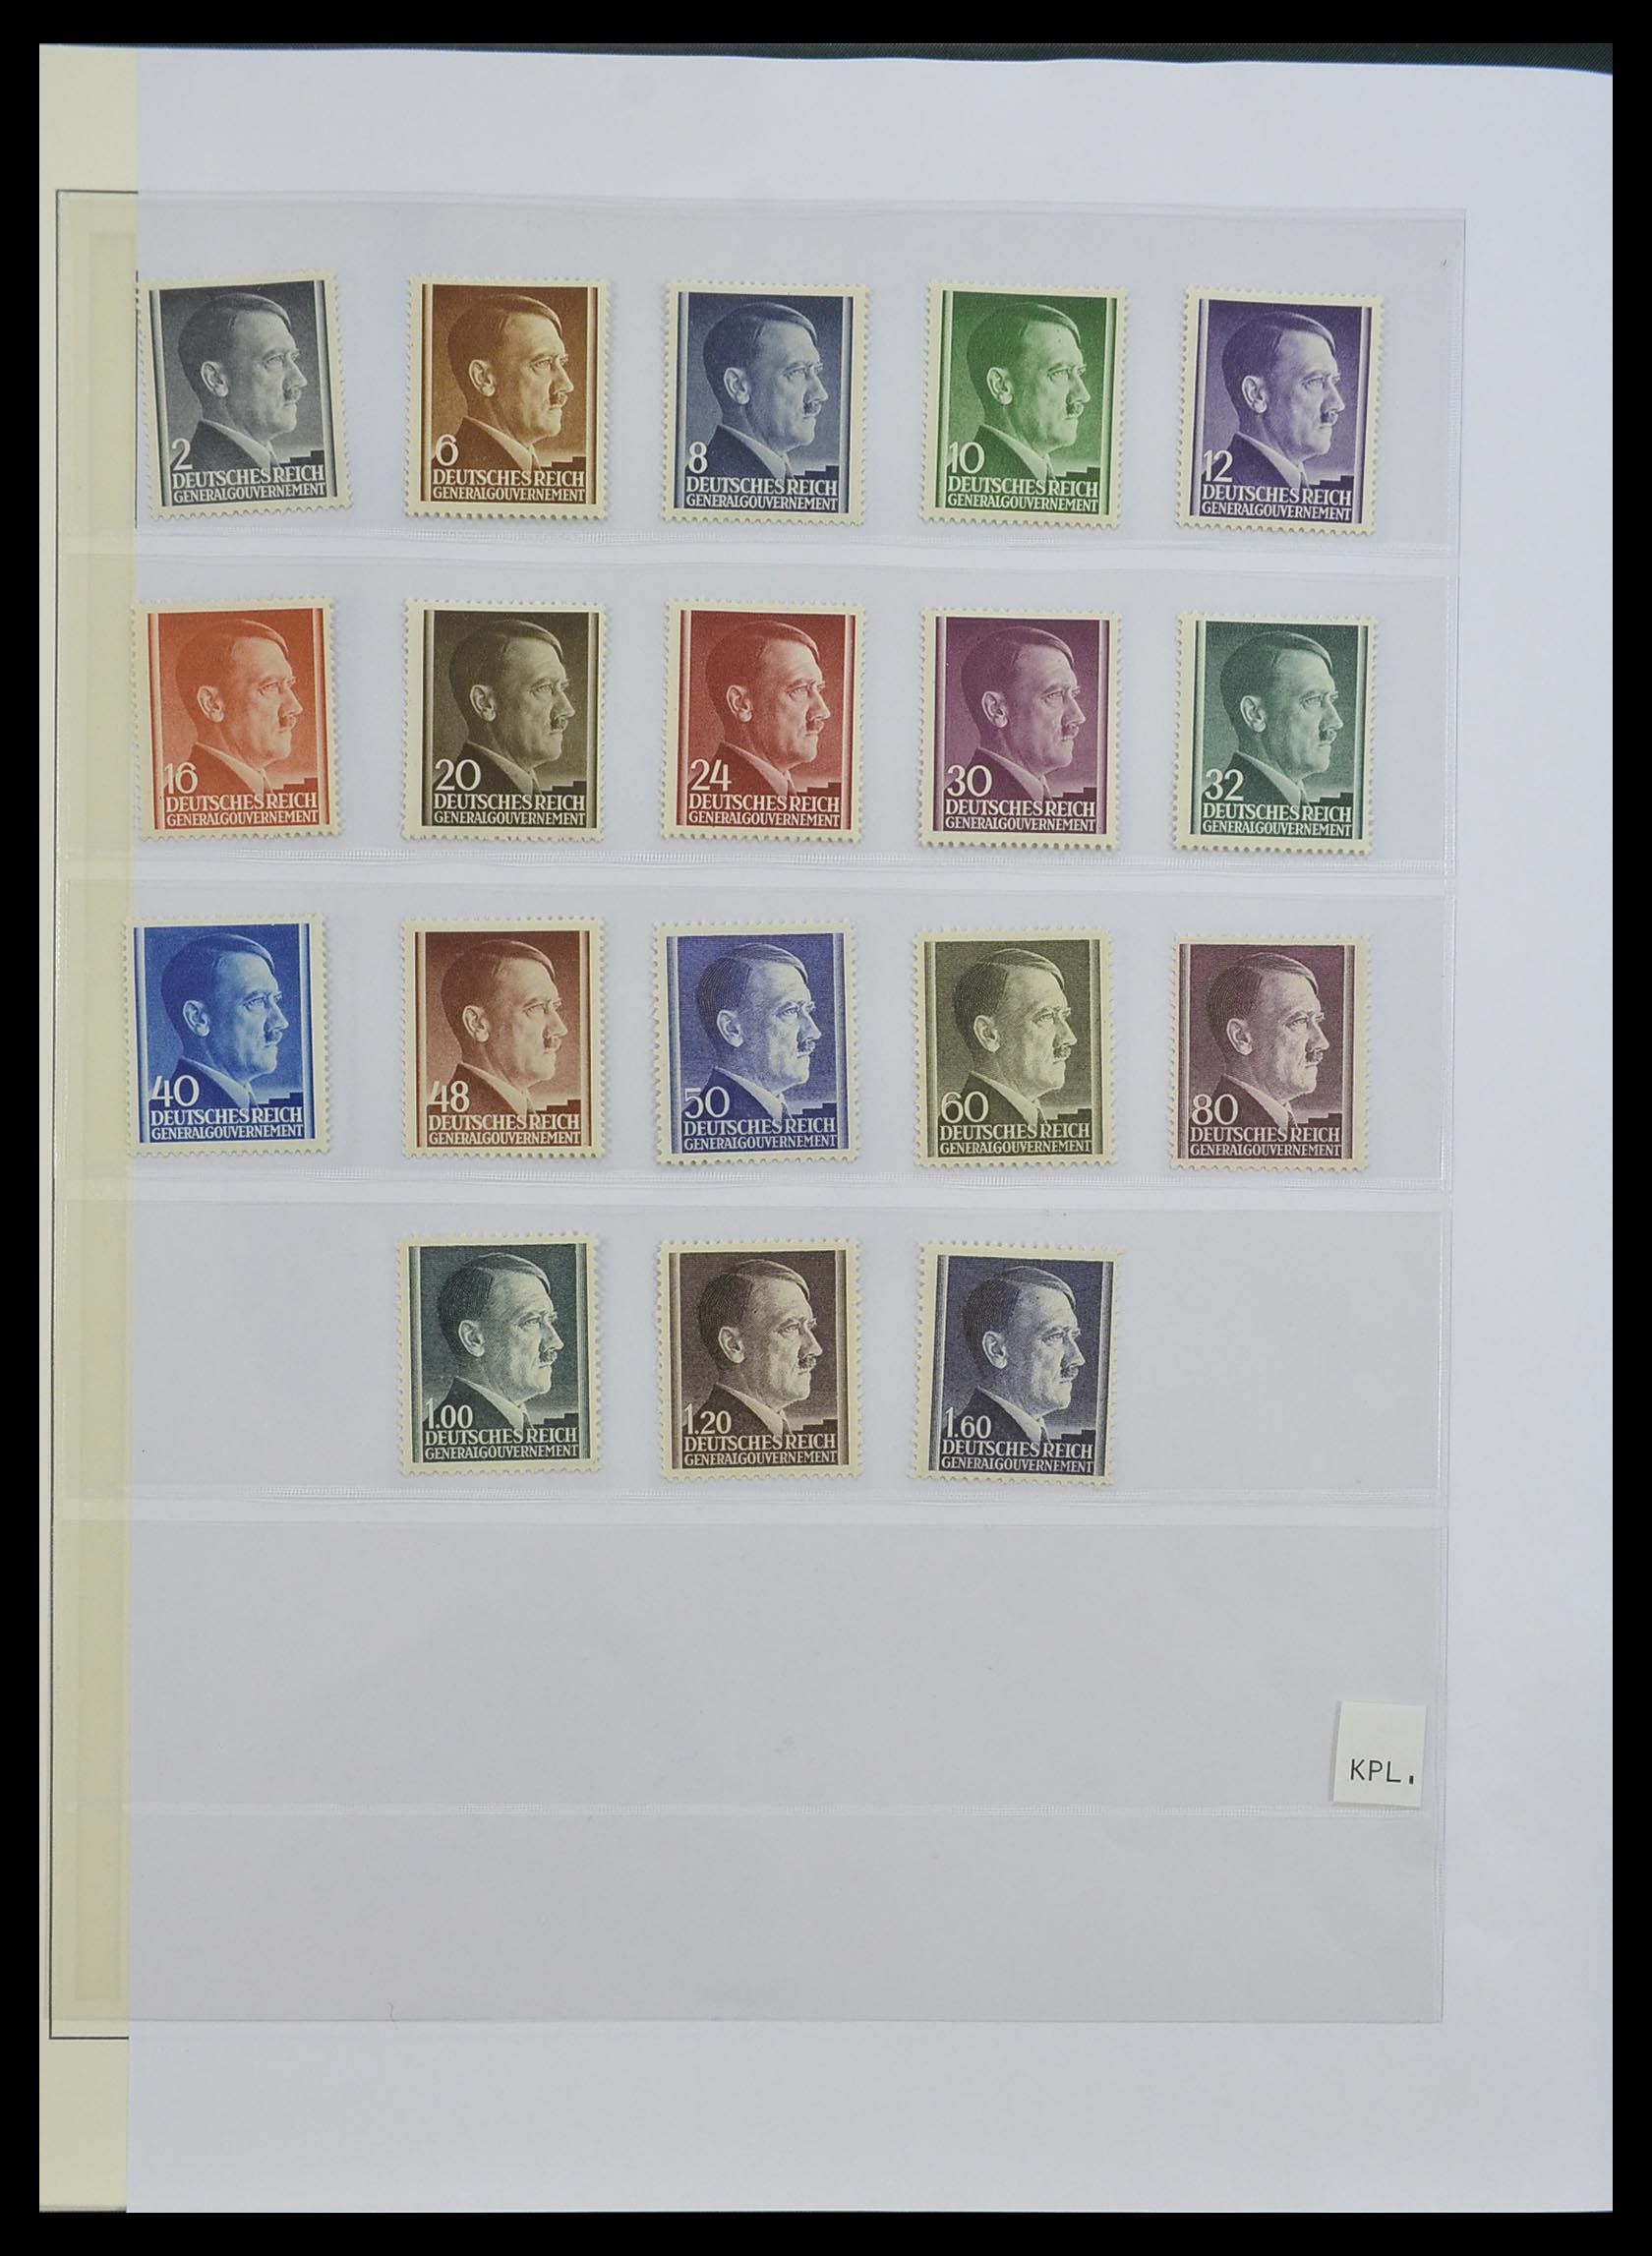 33229 197 - Stamp collection 33229 German Reich 1872-1945.